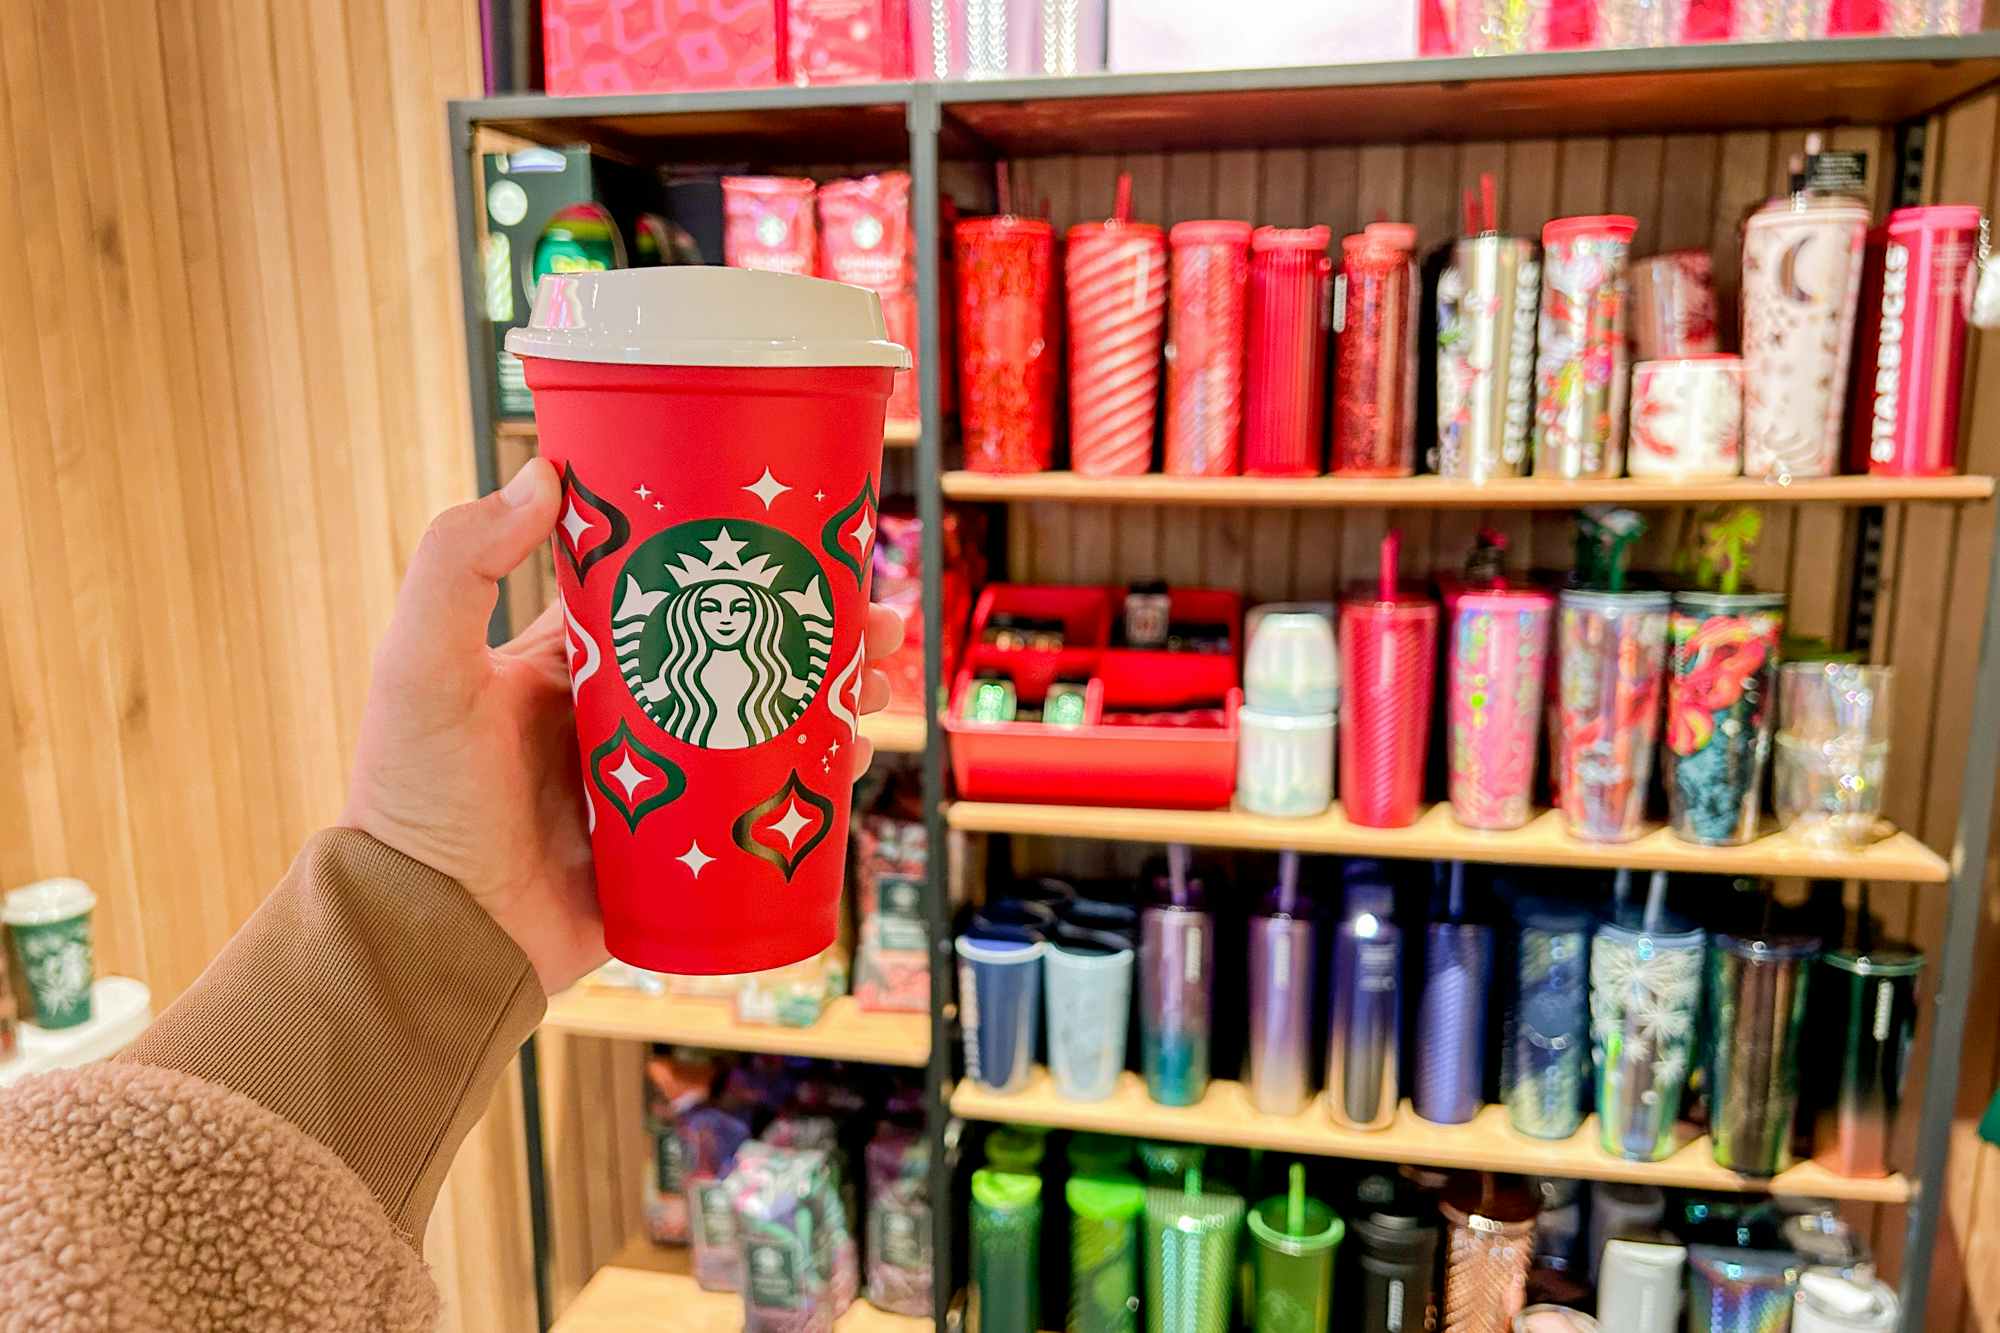 Christmas Tree Starbucks SVG - Winter Starbucks Hot Cup SVG 16 Oz